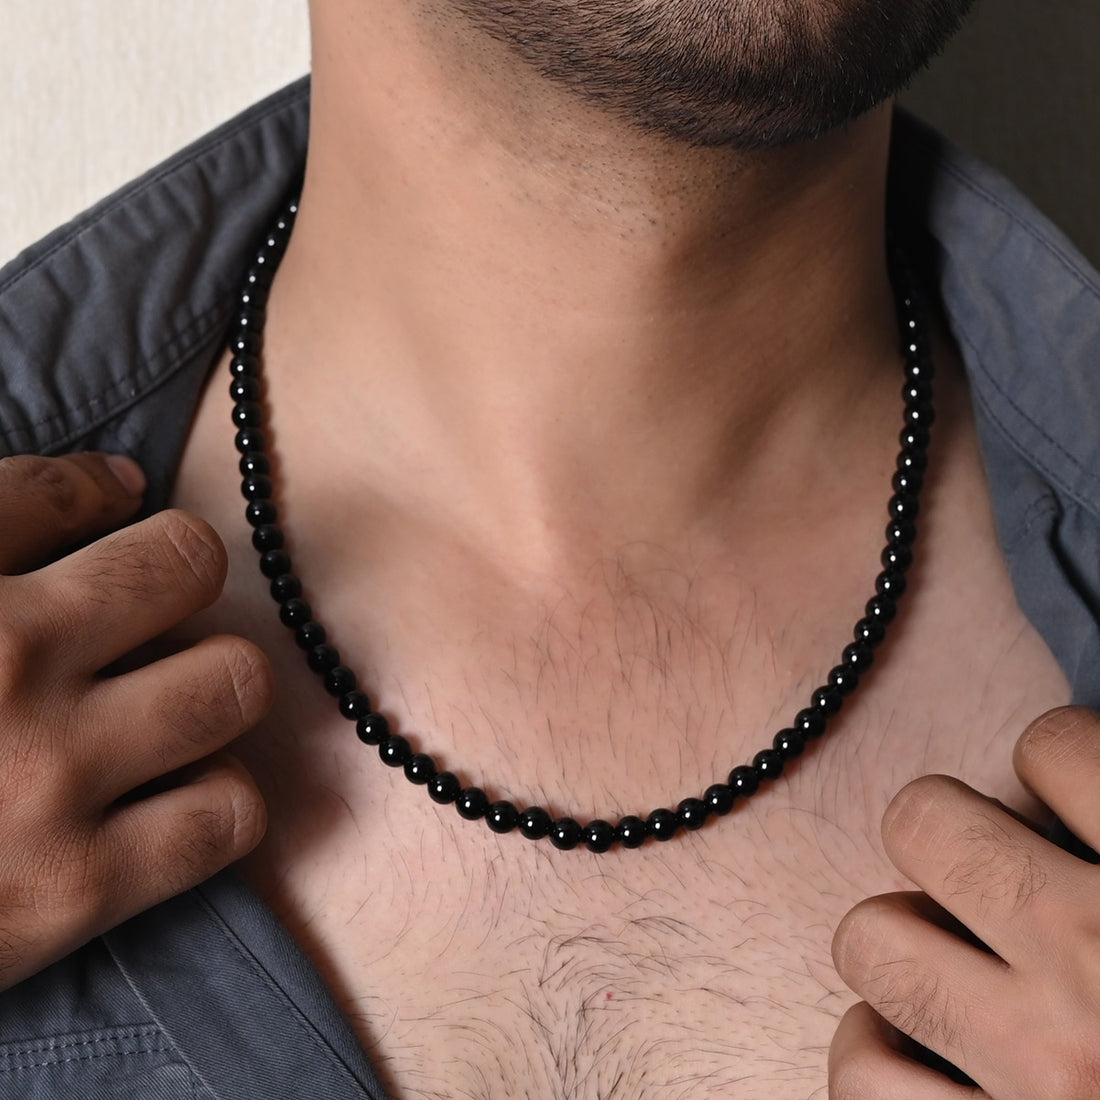 Men's Black Onyx Gemstone Silver Necklace: Sophistication meets strength